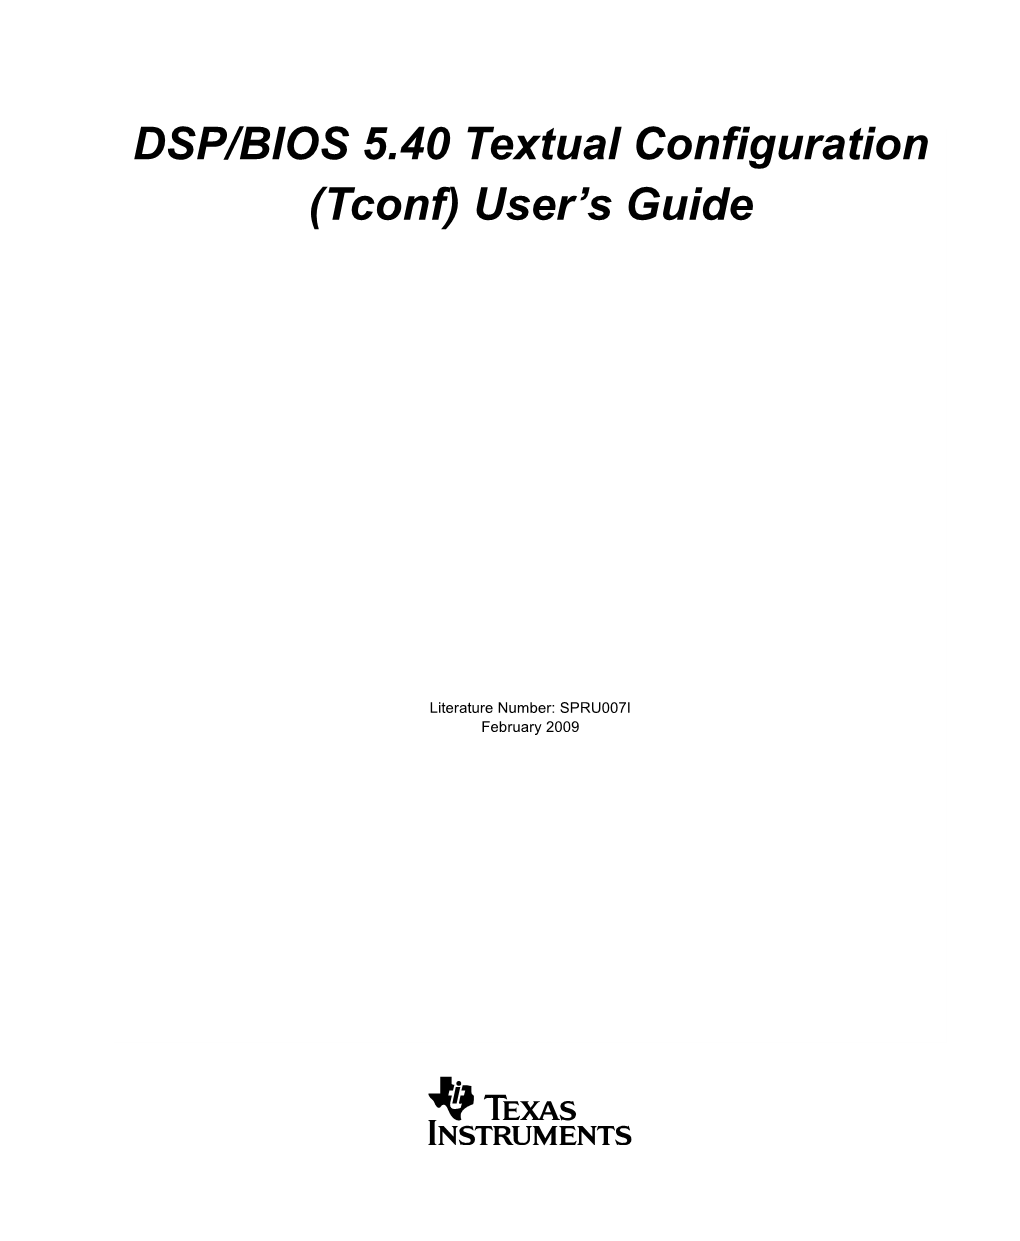 DSP/BIOS 5.40 Textual Configuration (Tconf) User's Guide